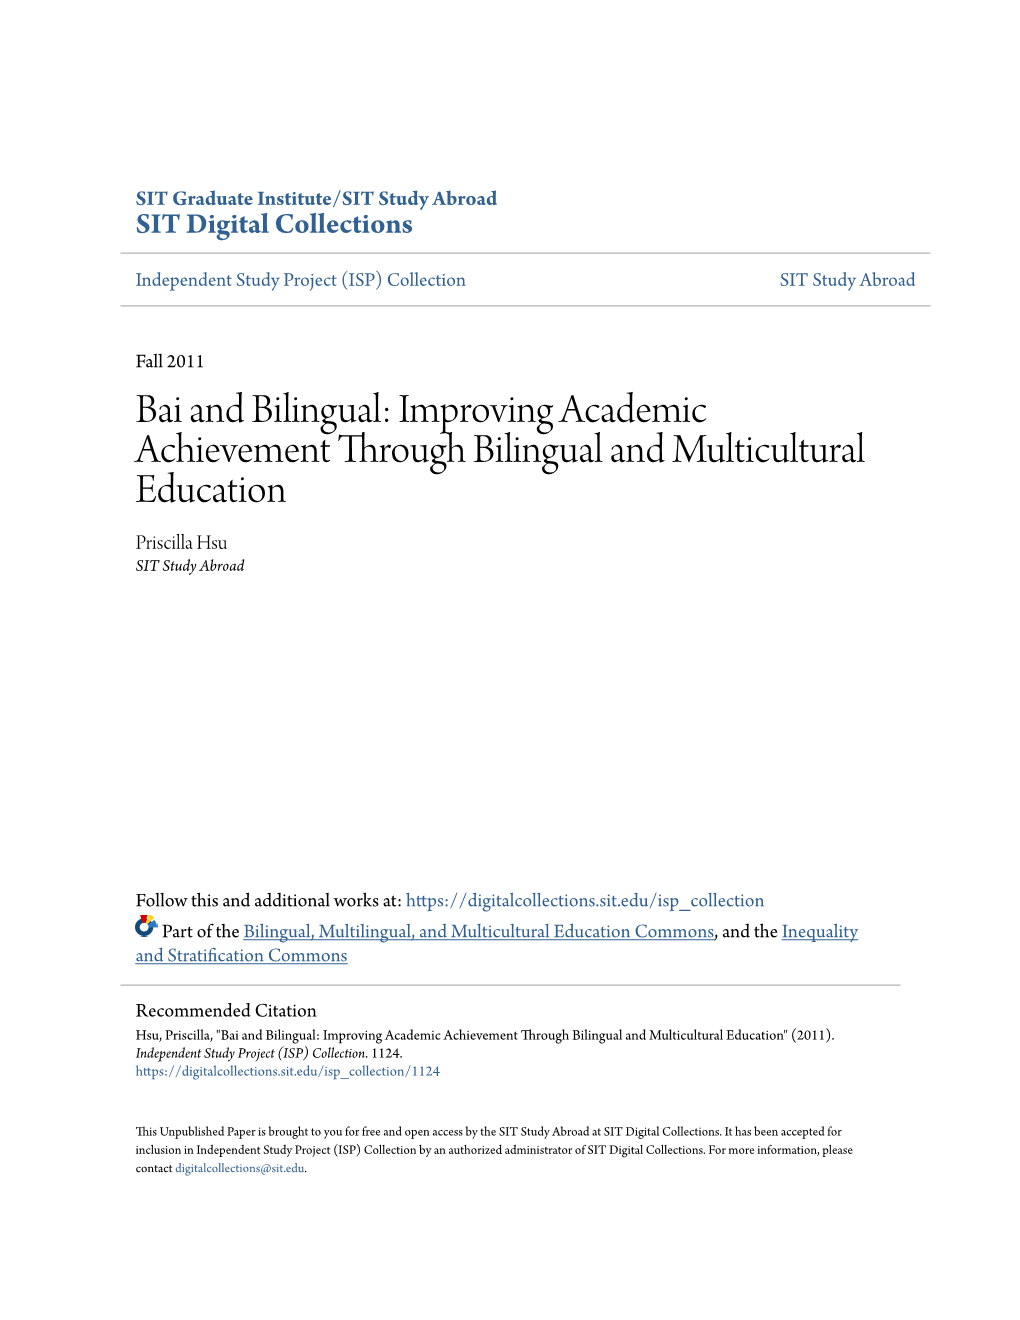 Bai and Bilingual: Improving Academic Achievement Through Bilingual and Multicultural Education Priscilla Hsu SIT Study Abroad